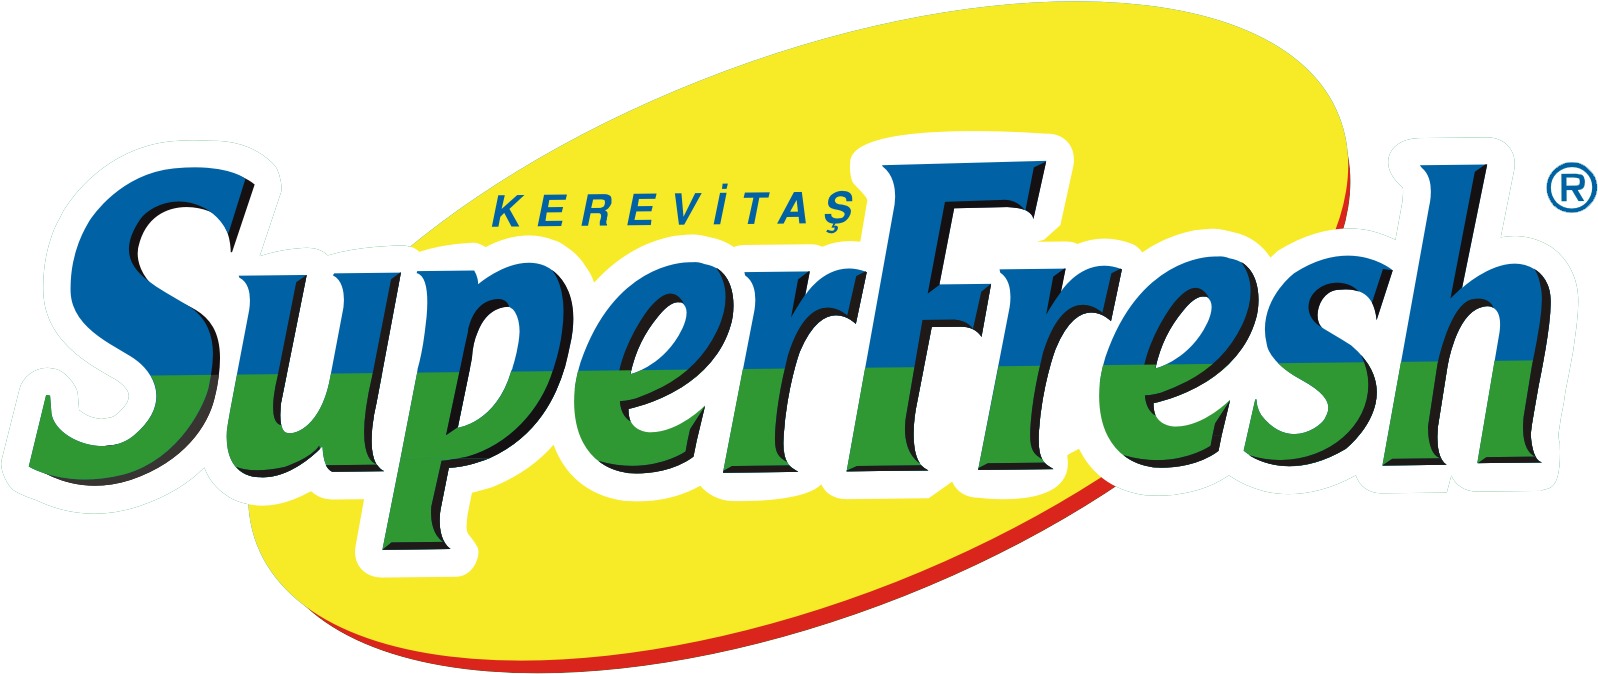 Super - Super Fresh (1713x870)